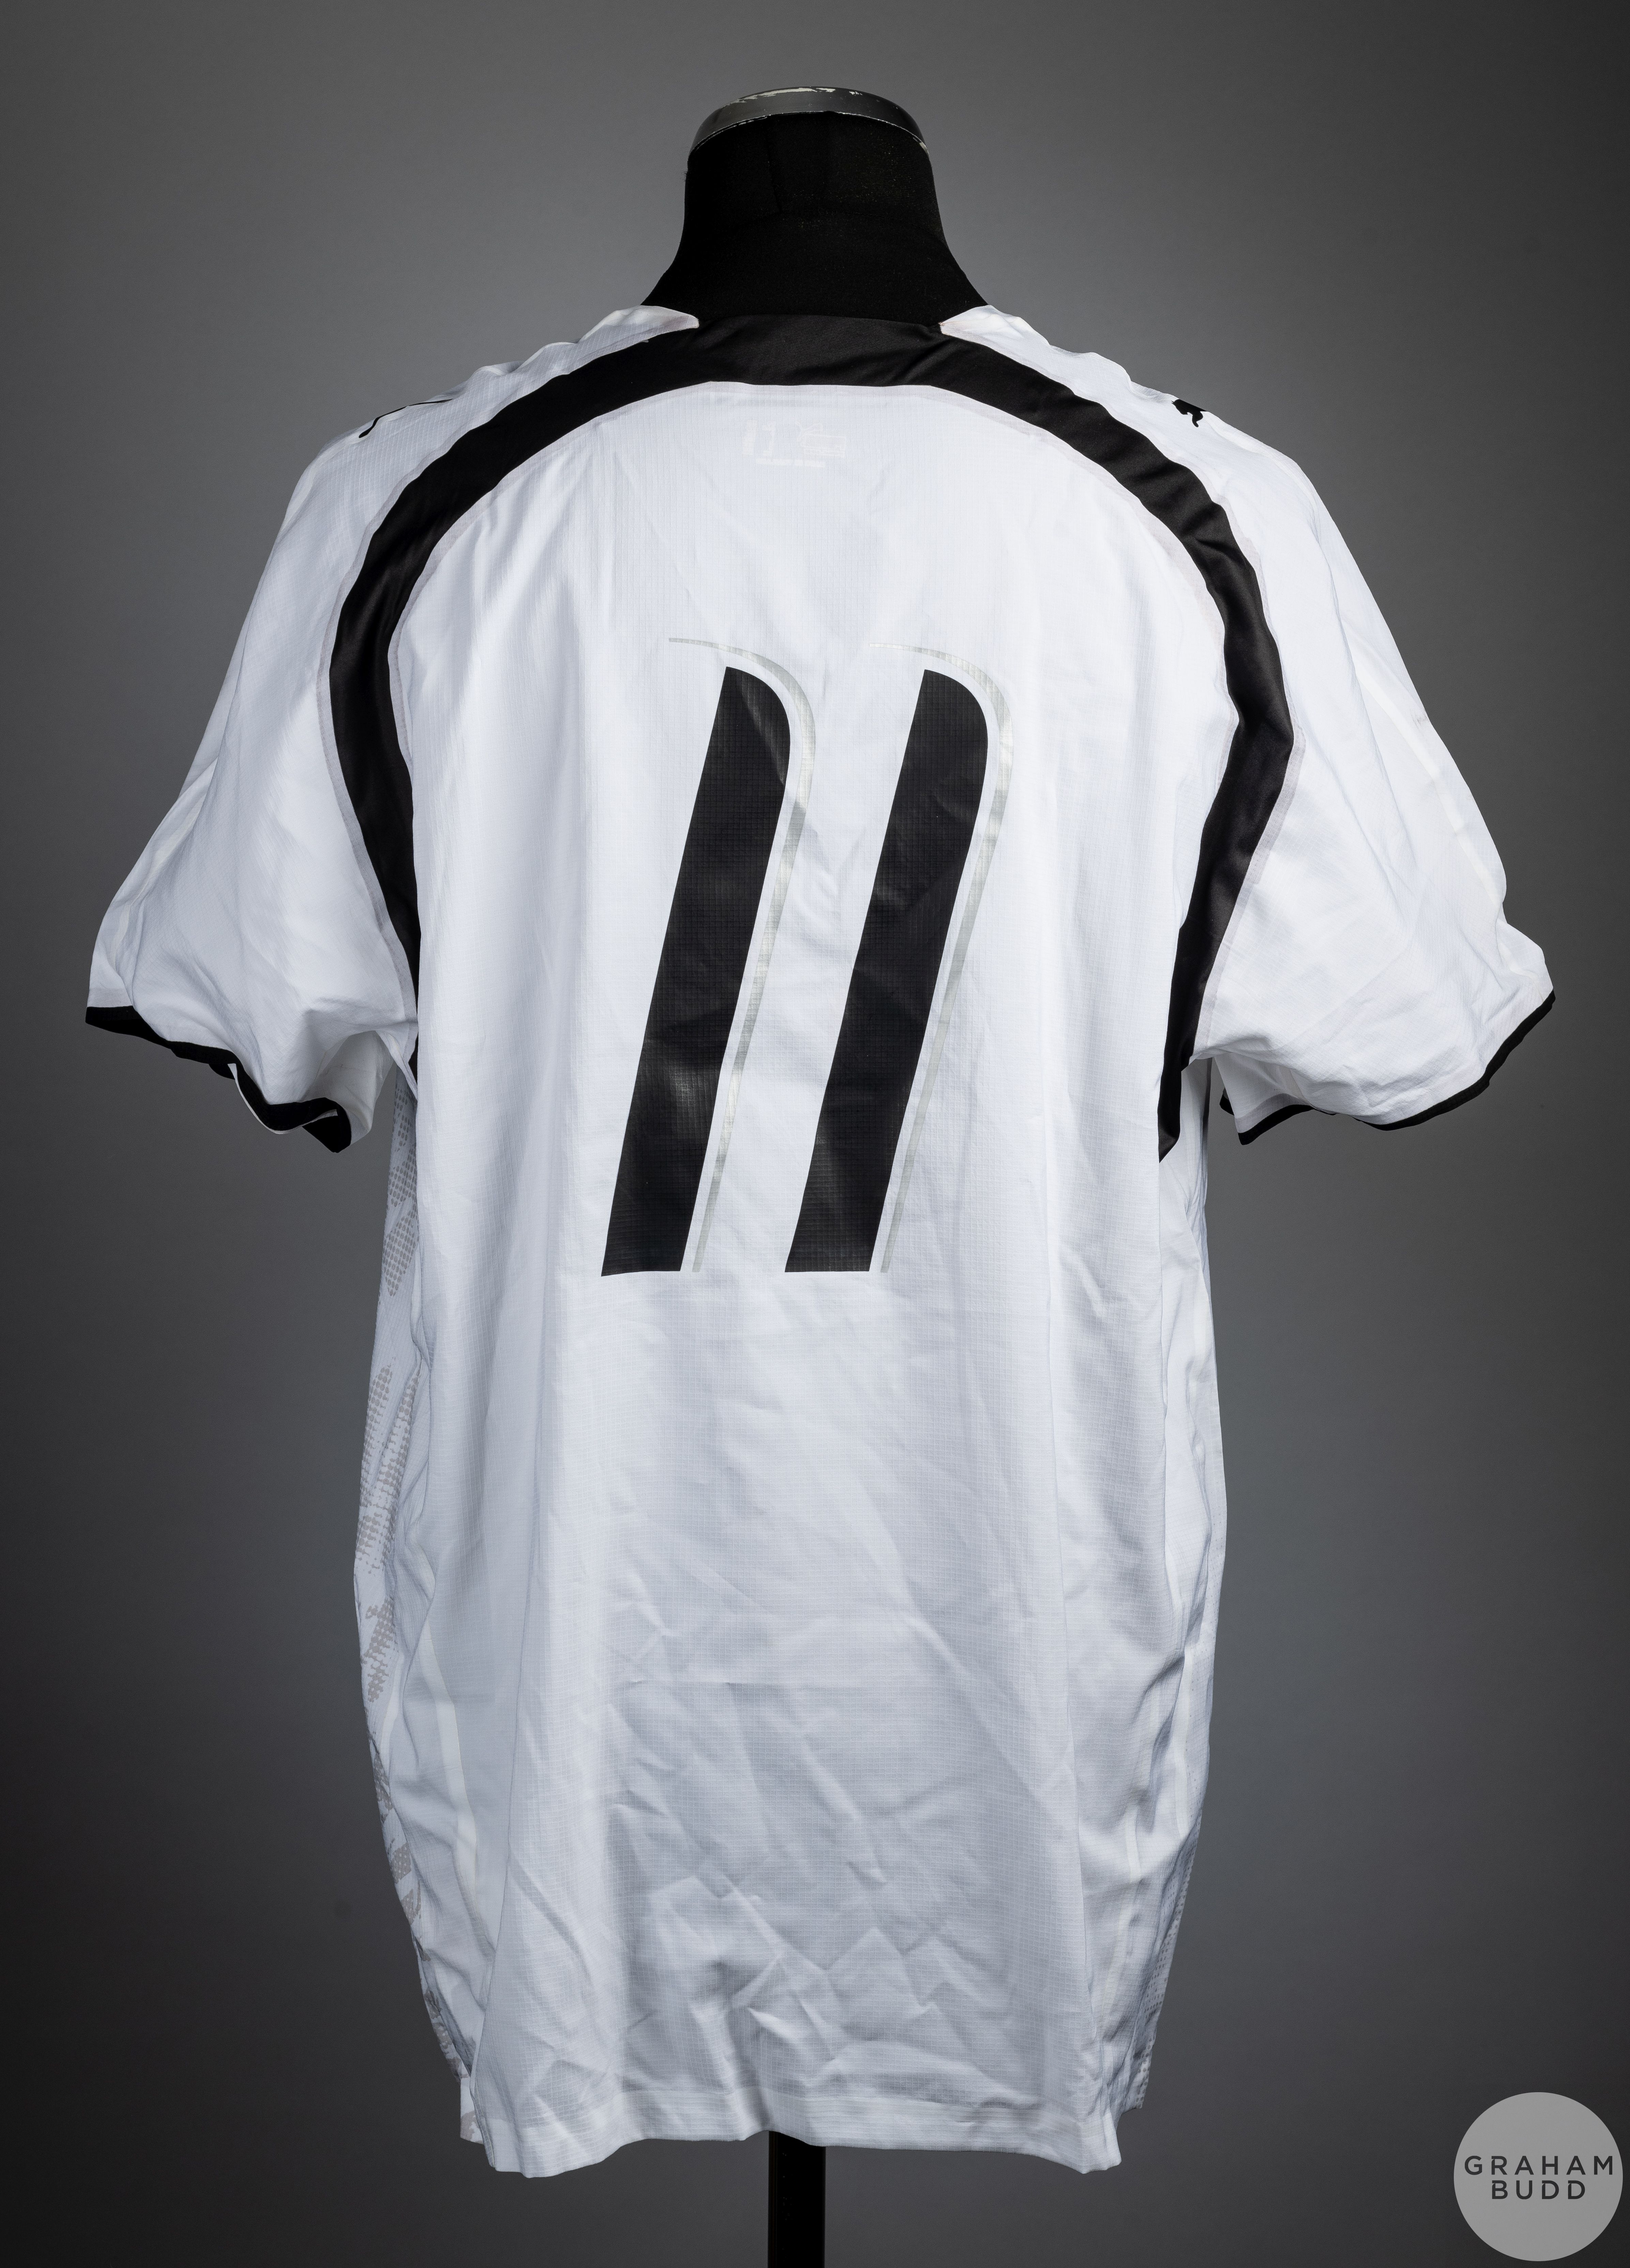 White No.11 Ghana International shirt-sleeved shirt - Image 2 of 2